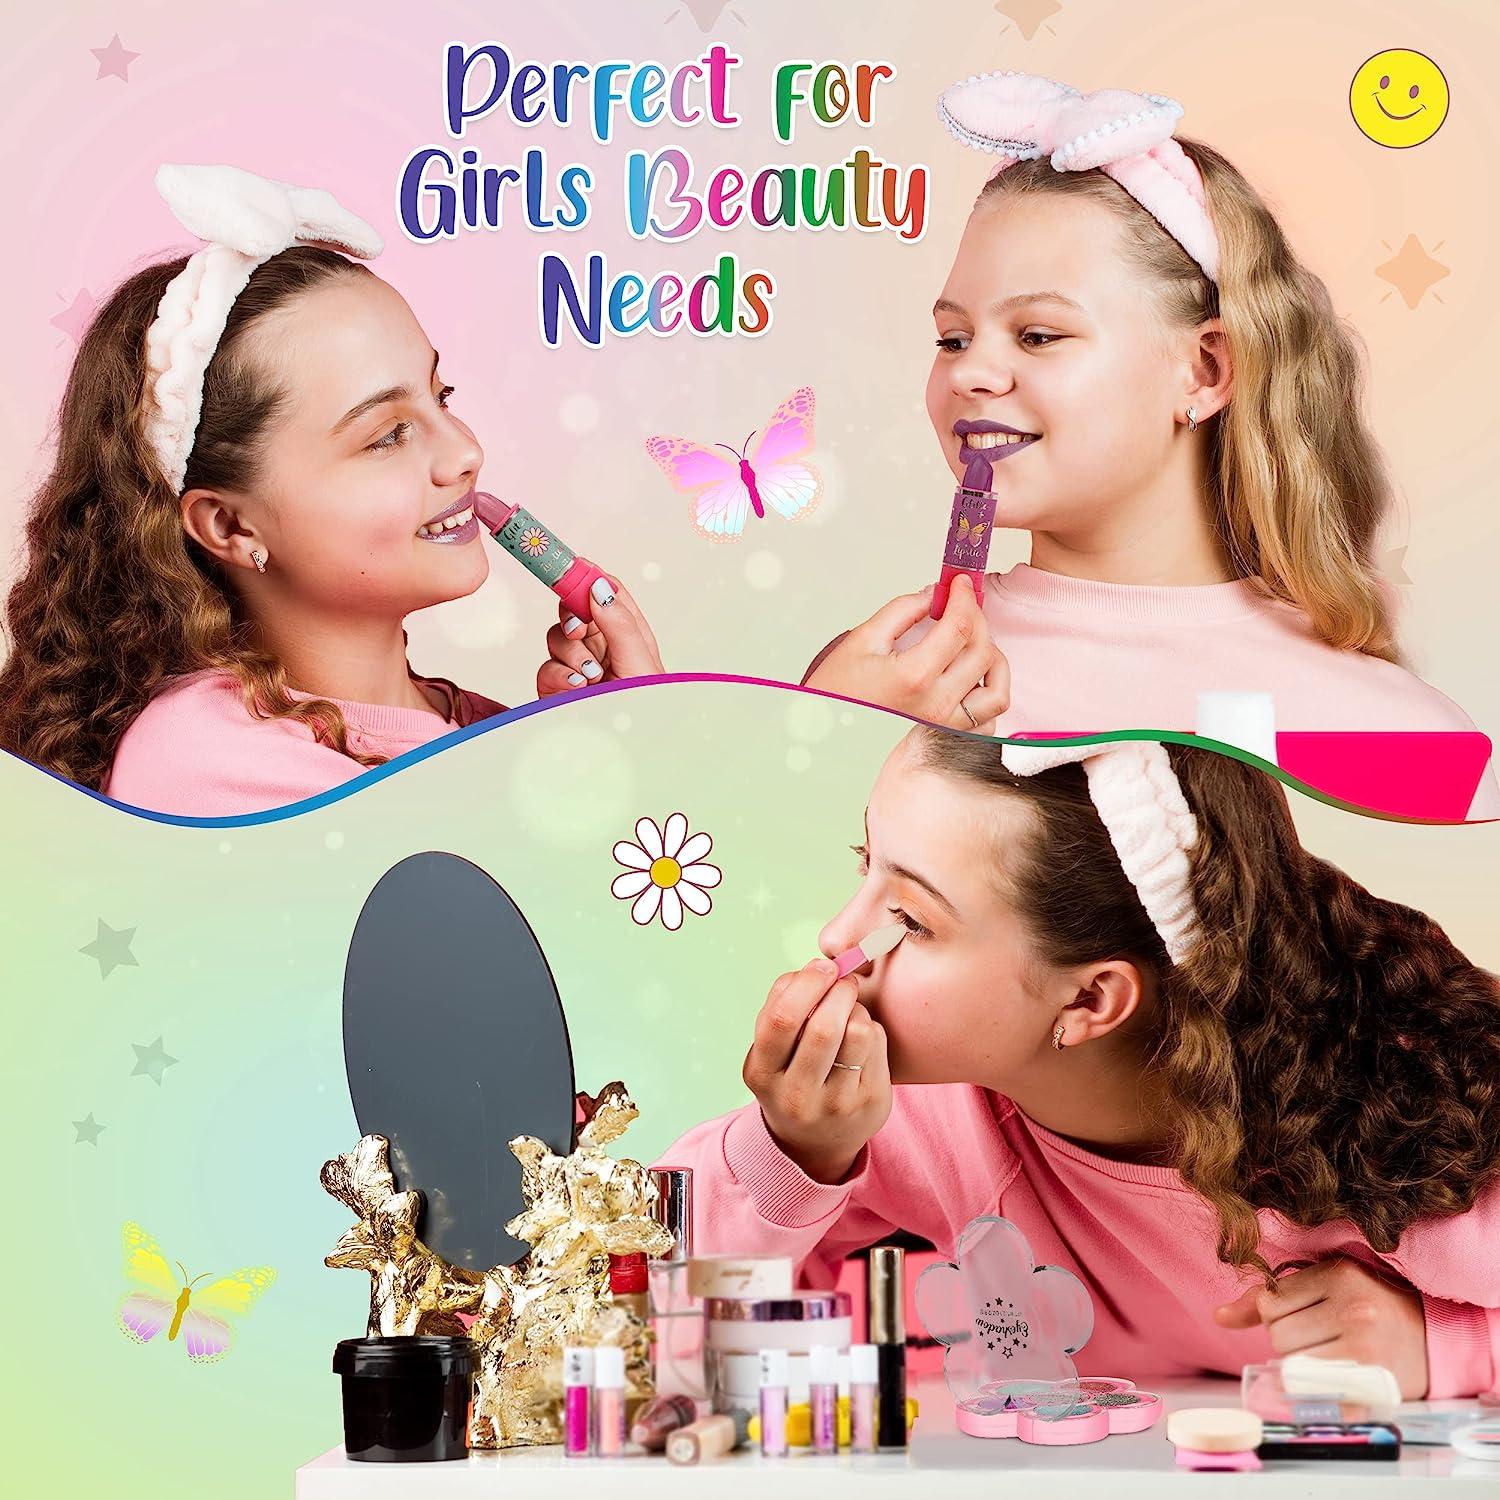 Makeup sets kits for kids unicorn washable pretend play cosmetic